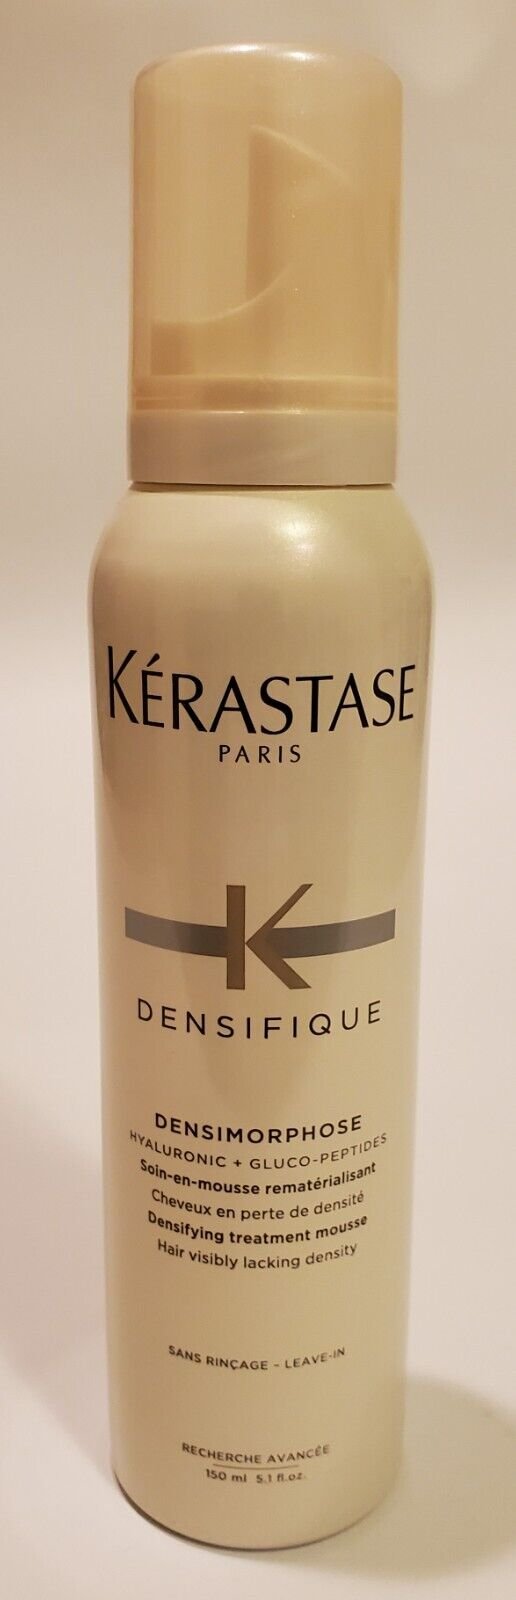 Kerastase Densimorphose Densifying Treatment Mousse 5.1 oz. 100% Authentic